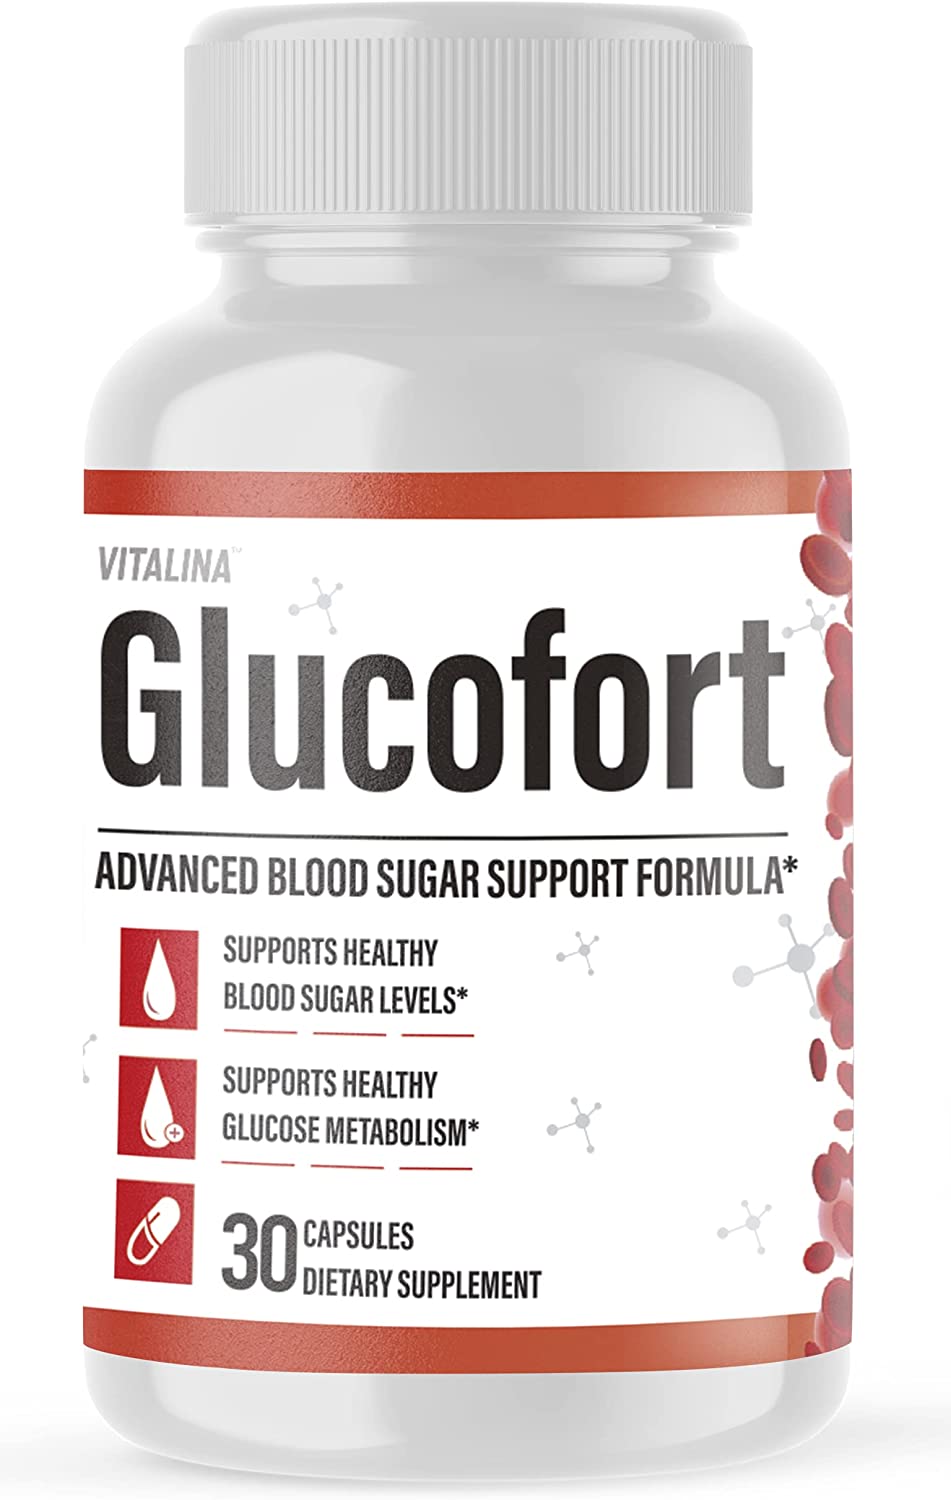 Glucofort Customer Reviews